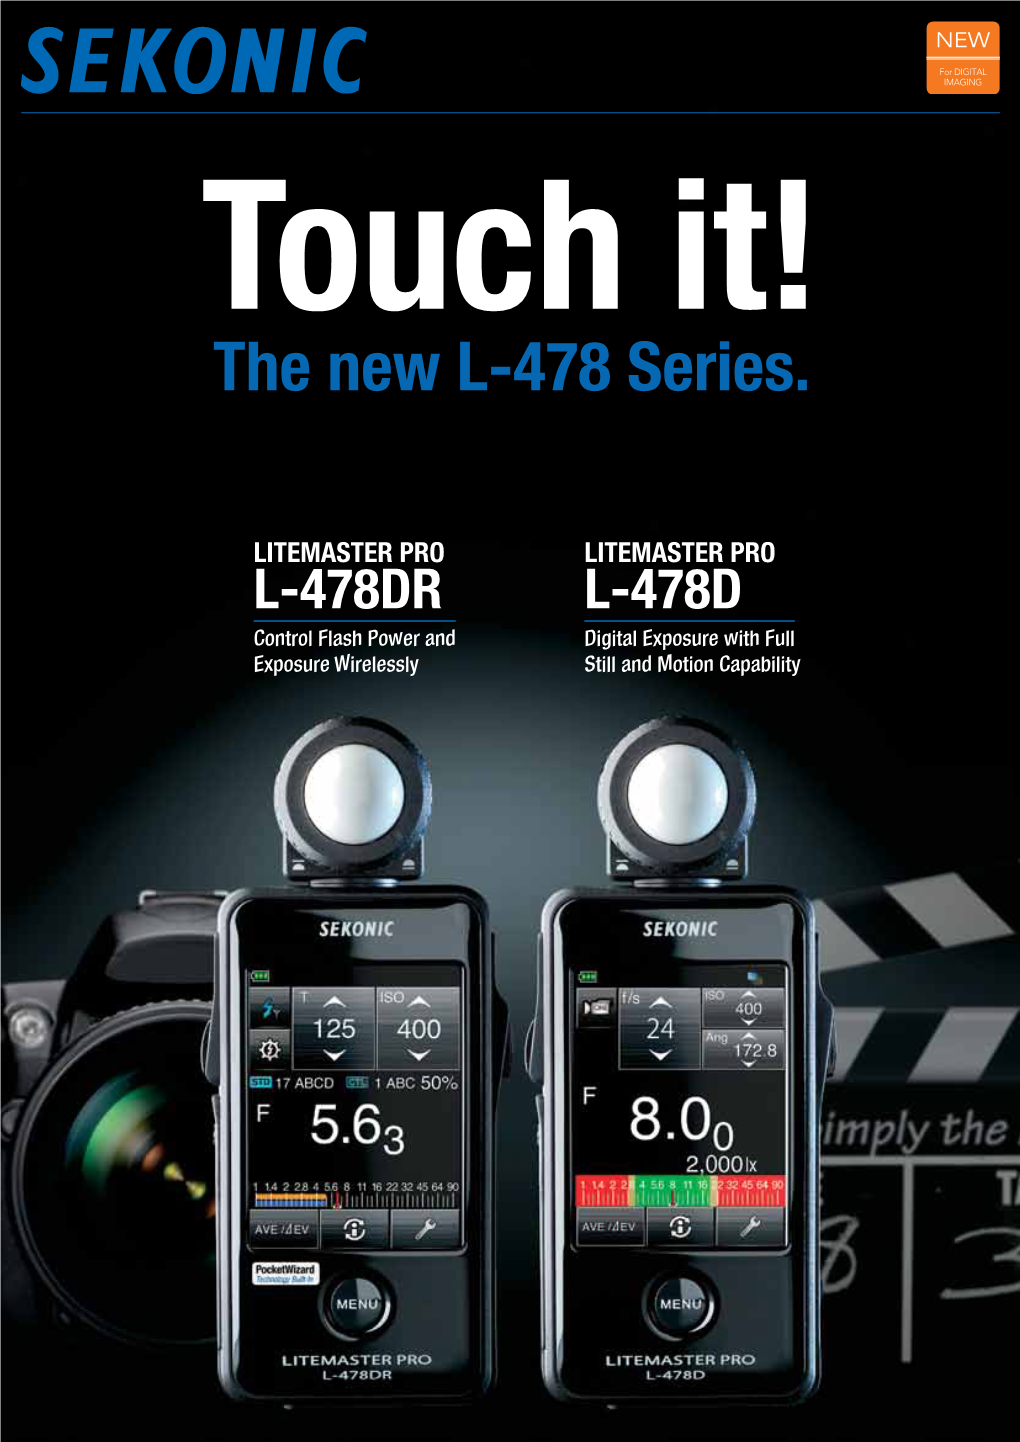 The New L-478 Series